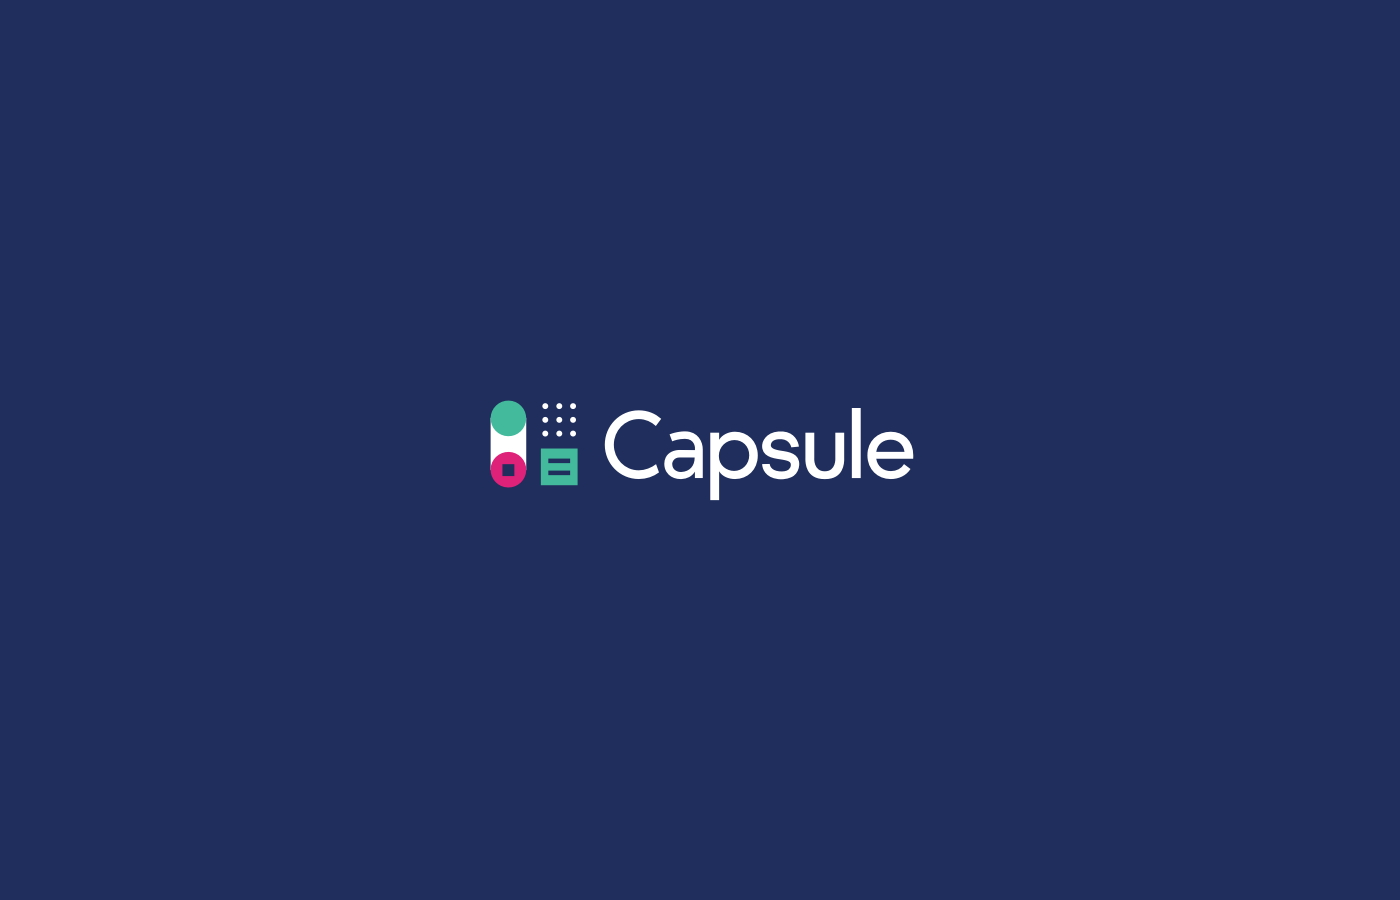 Capsule Logo - New Logo and Brand for Capsule